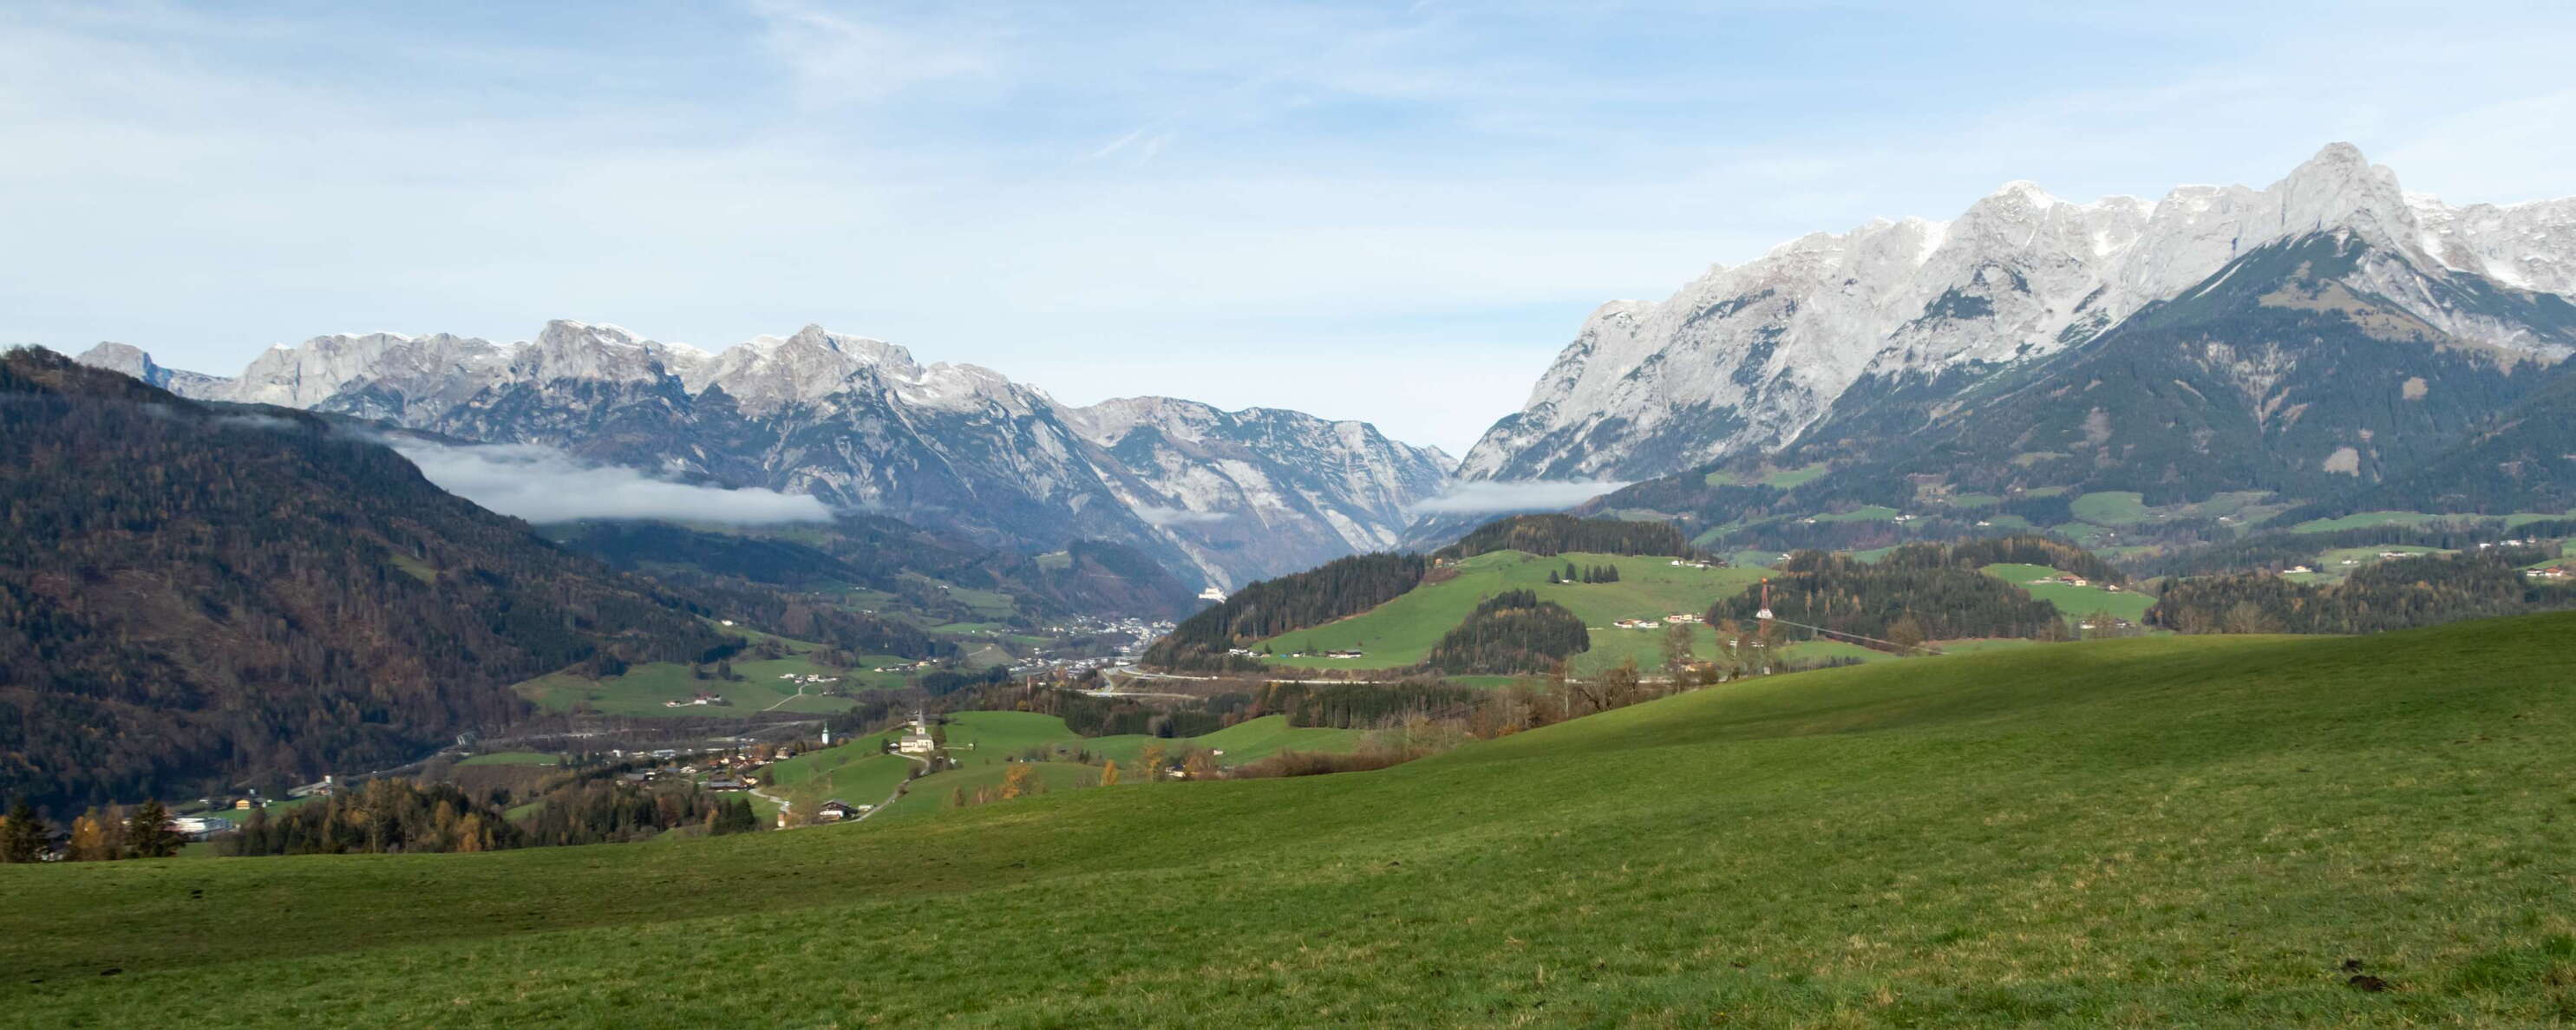 Salzach Valley with Hagengebirge and Tennengebirge